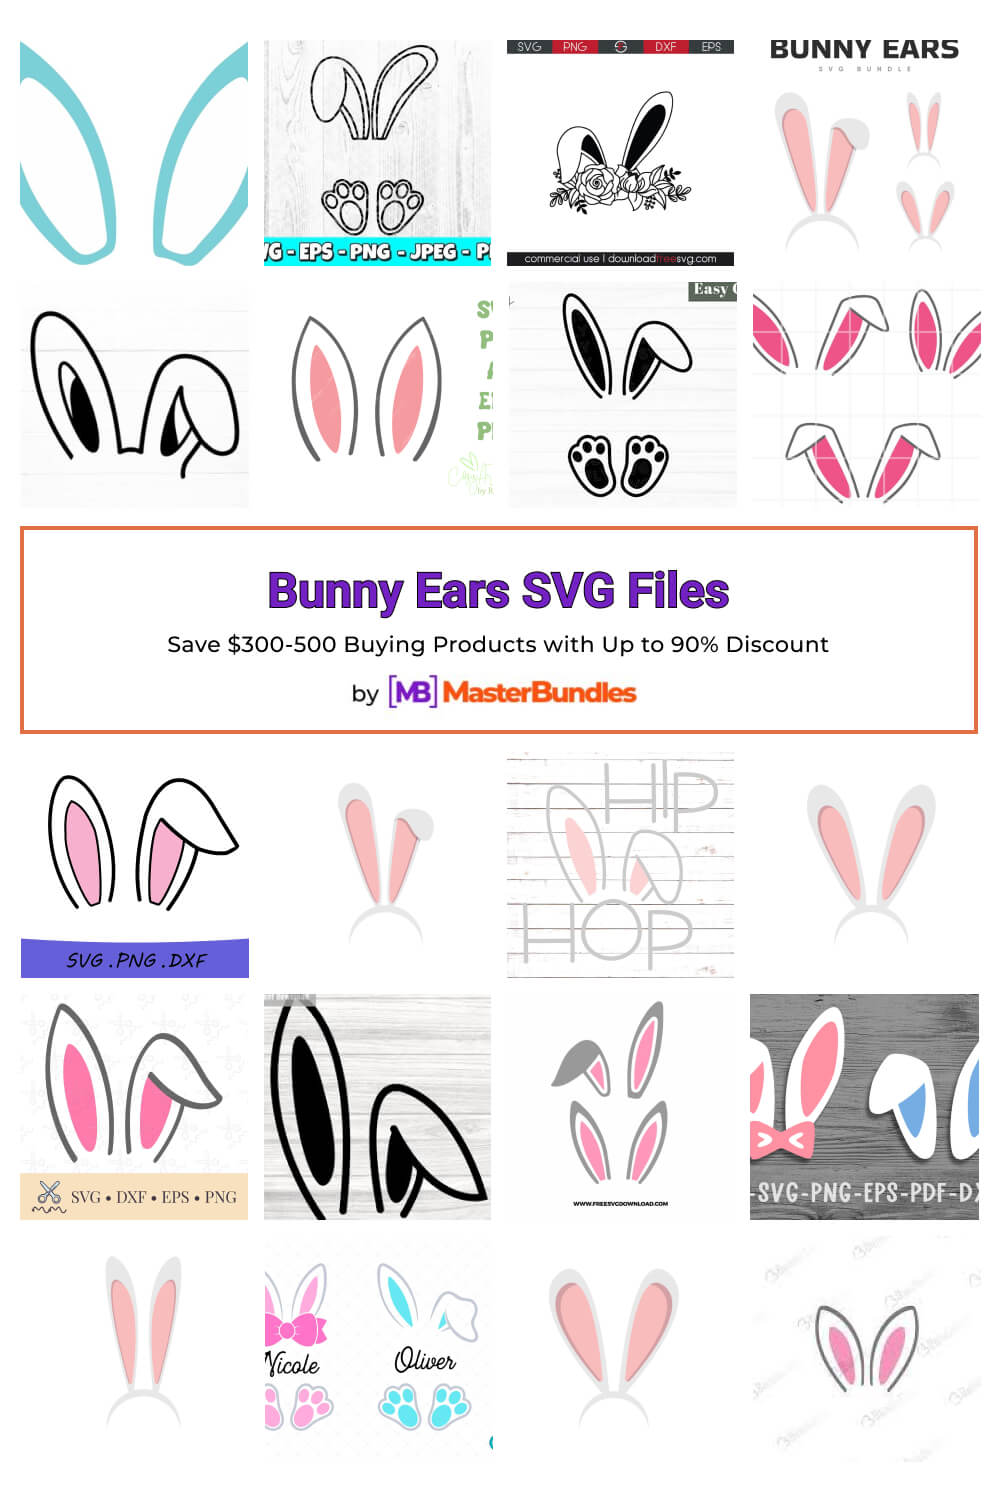 bunny ears svg files pinterest image.